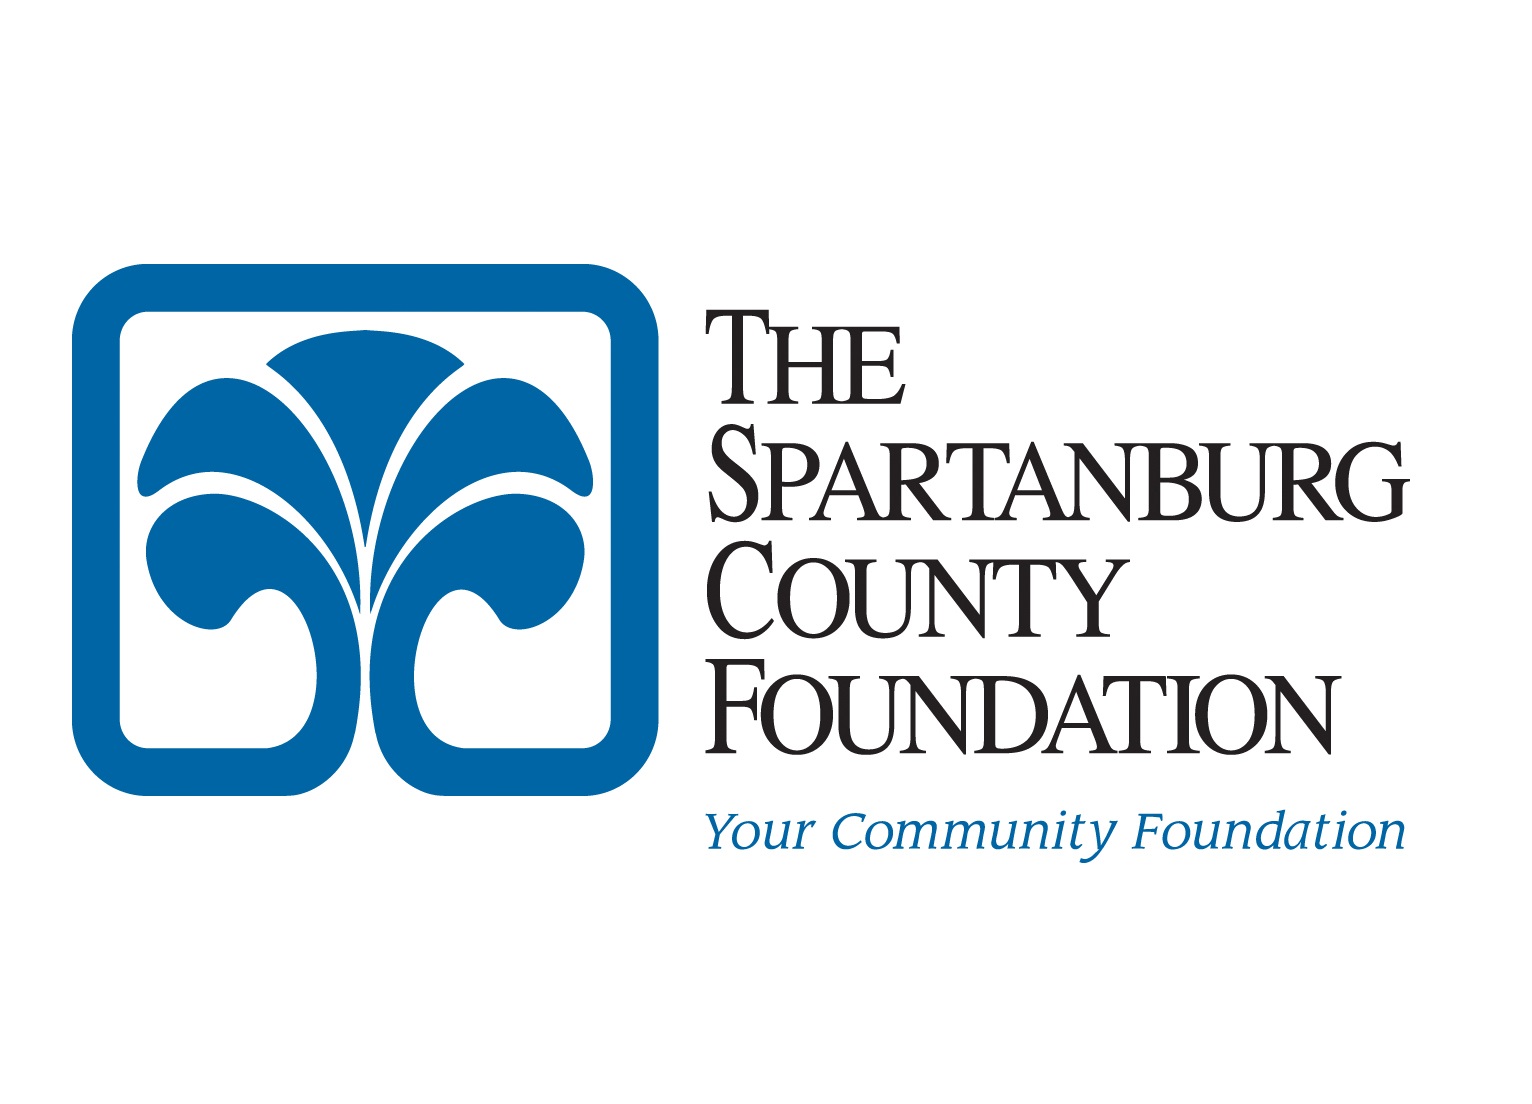 The Spartanburg County Foundation Logo